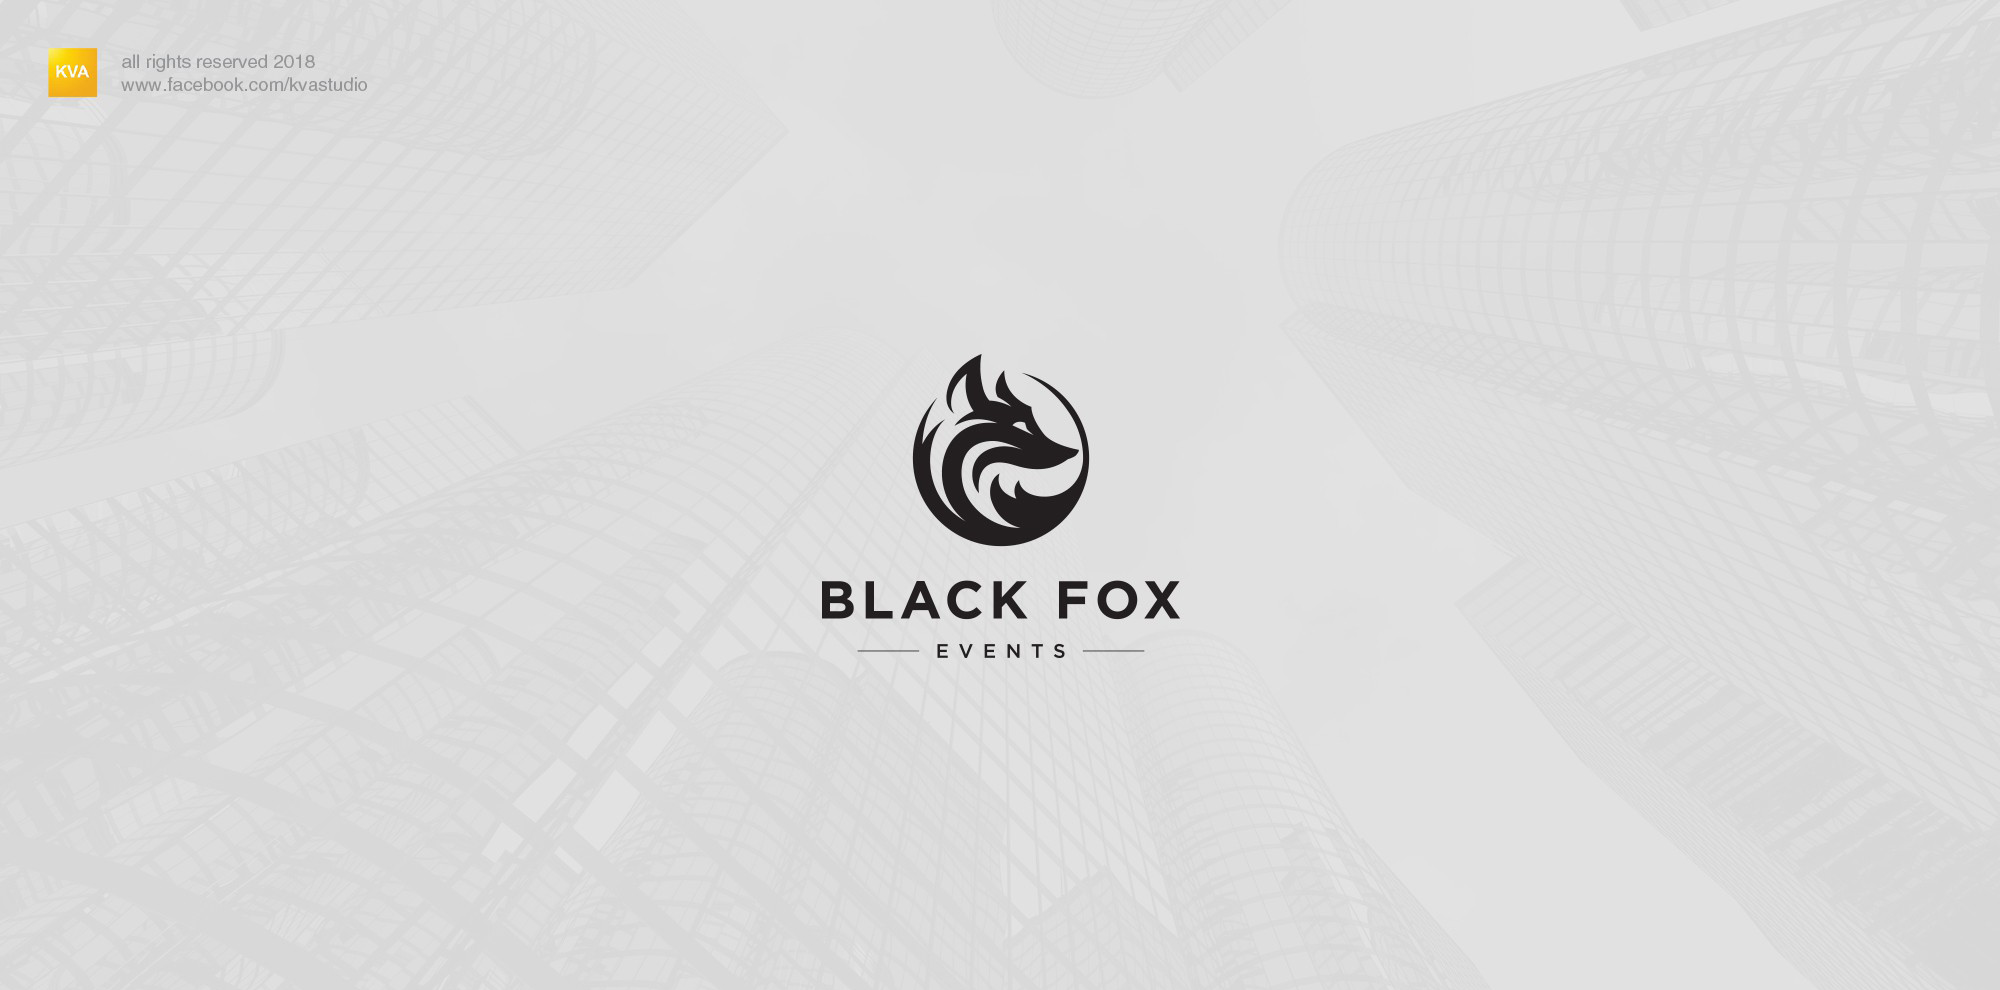 BlackFox_logo_byKVA